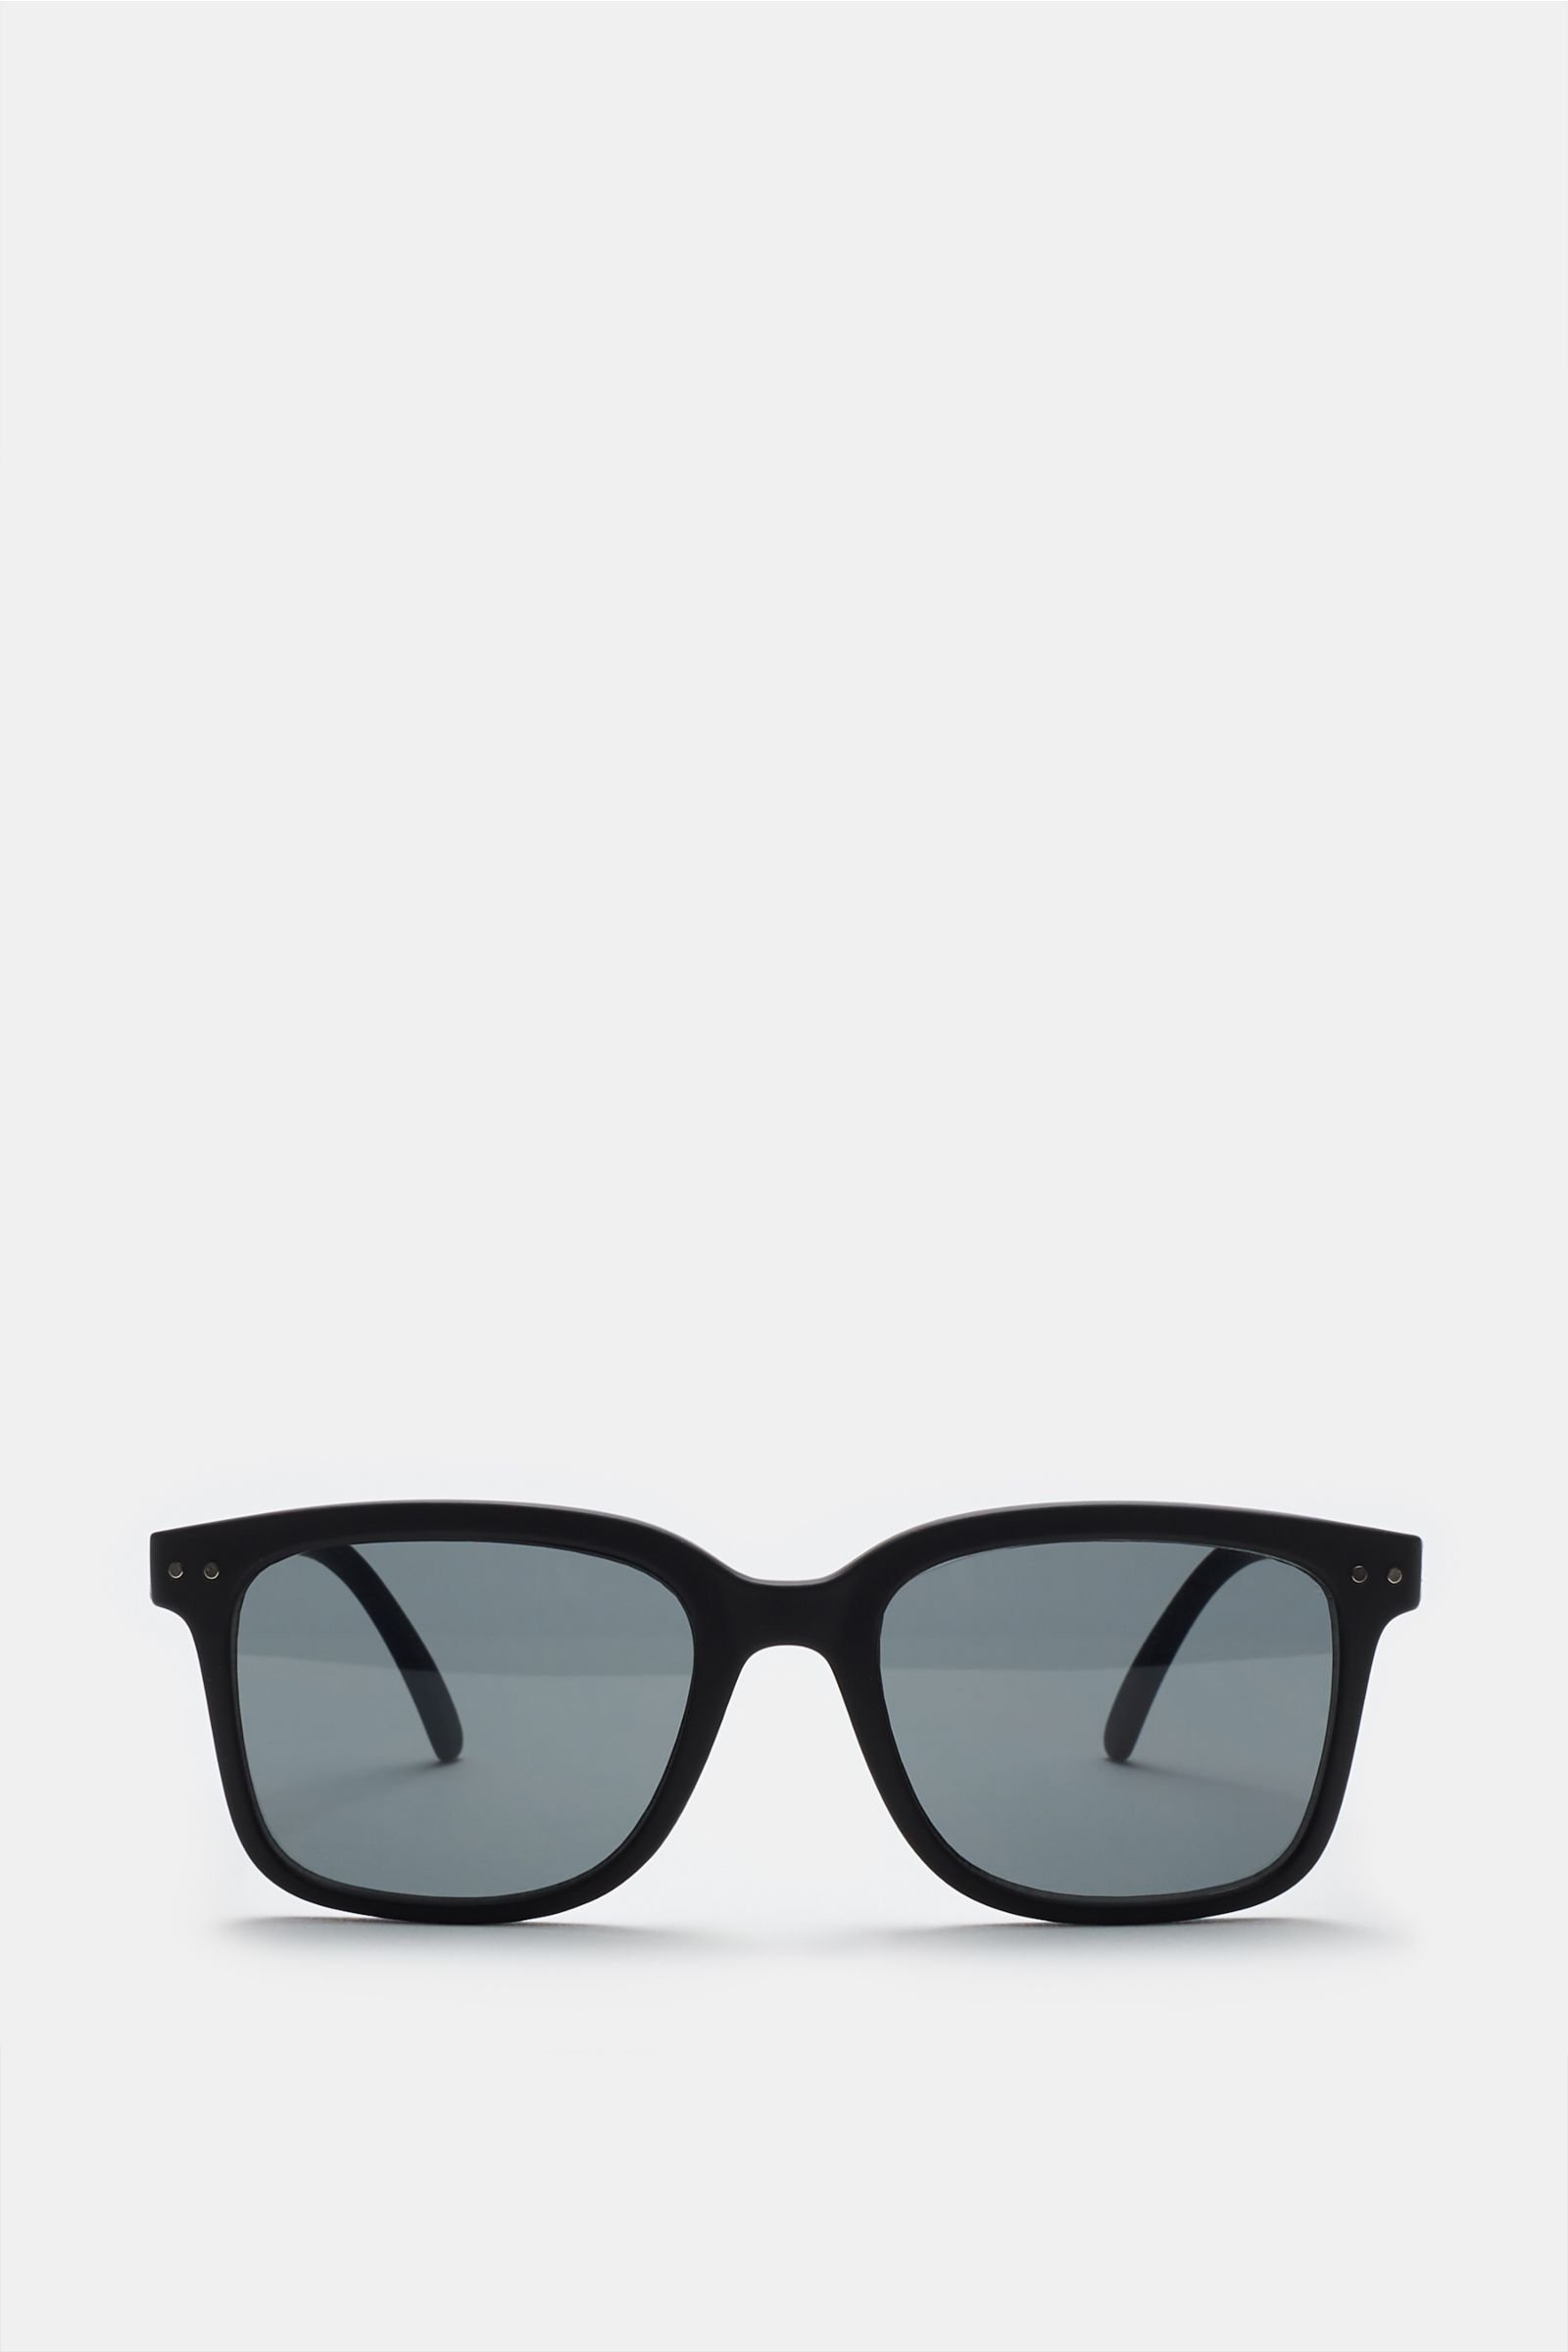 Sunglasses '#L Sun' black/grey